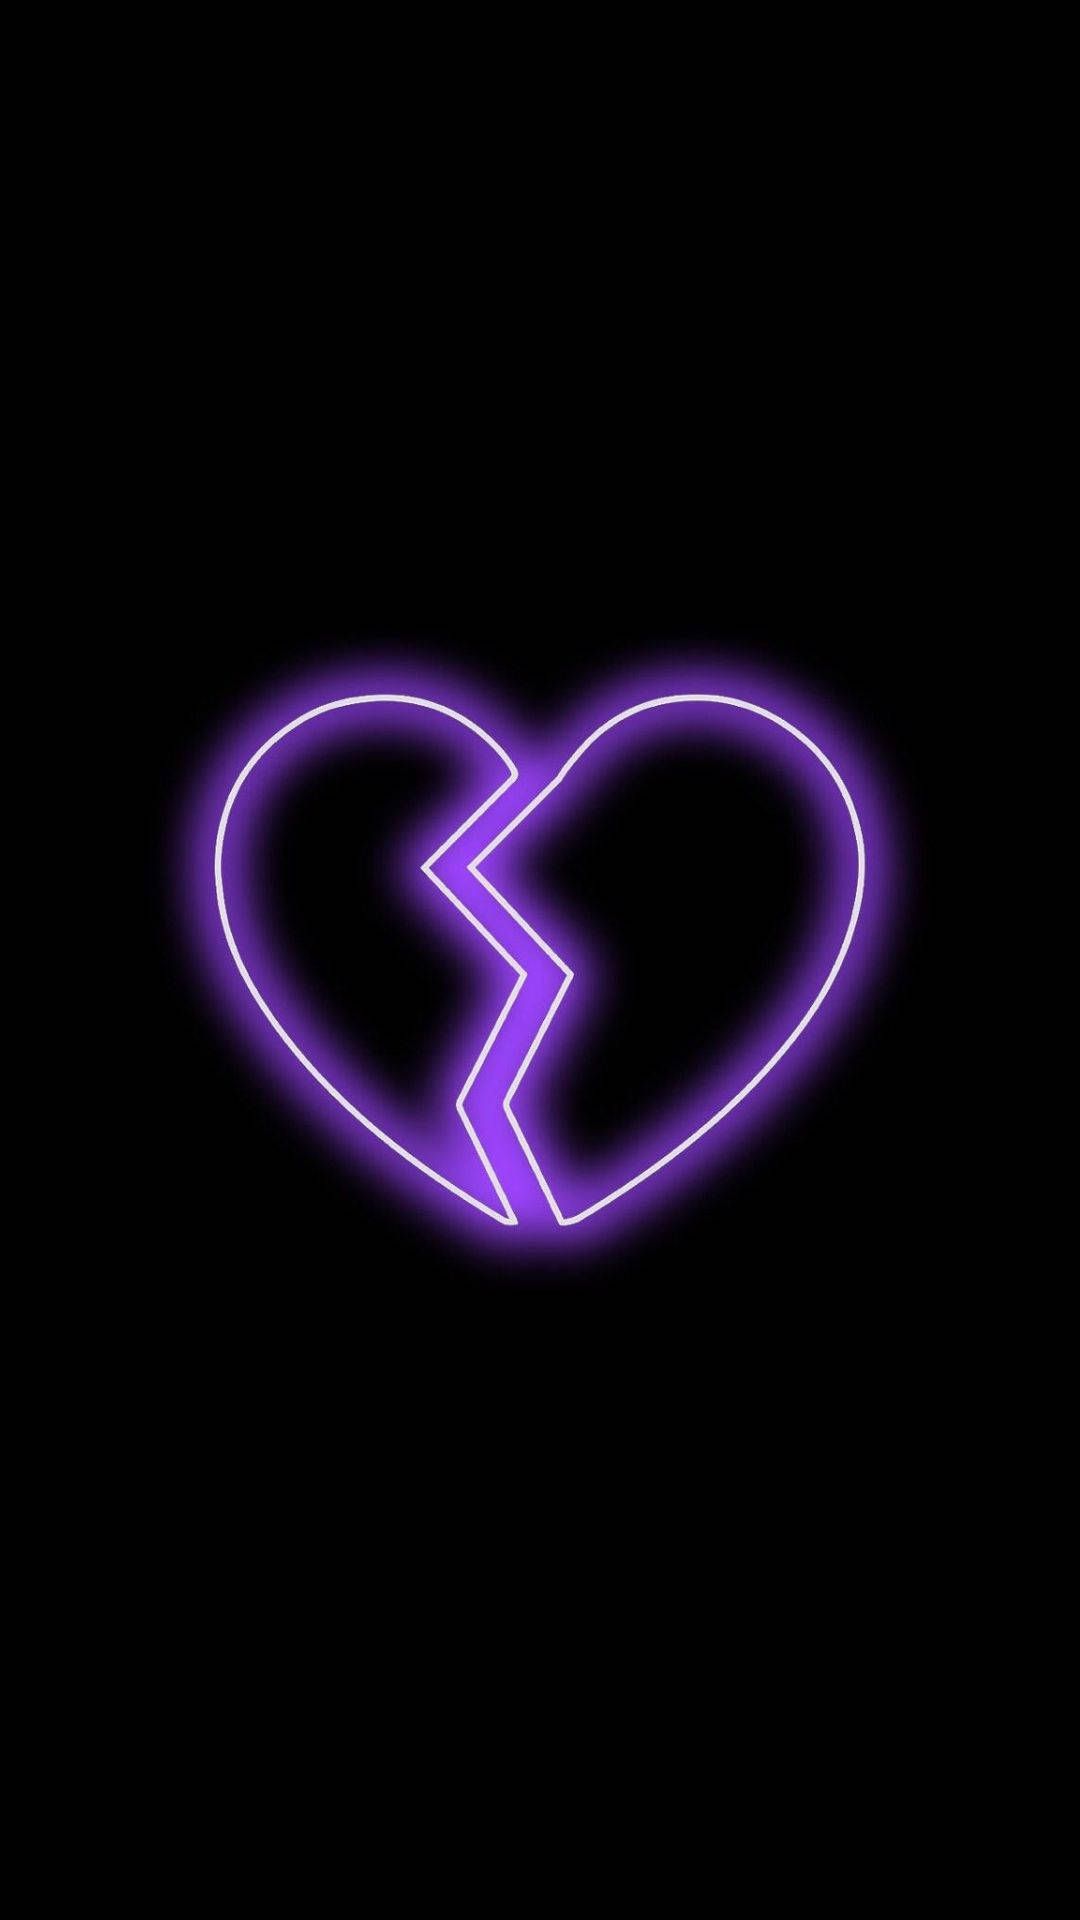 Aesthetic purple neon broken heart wallpaper for phone. - Black heart